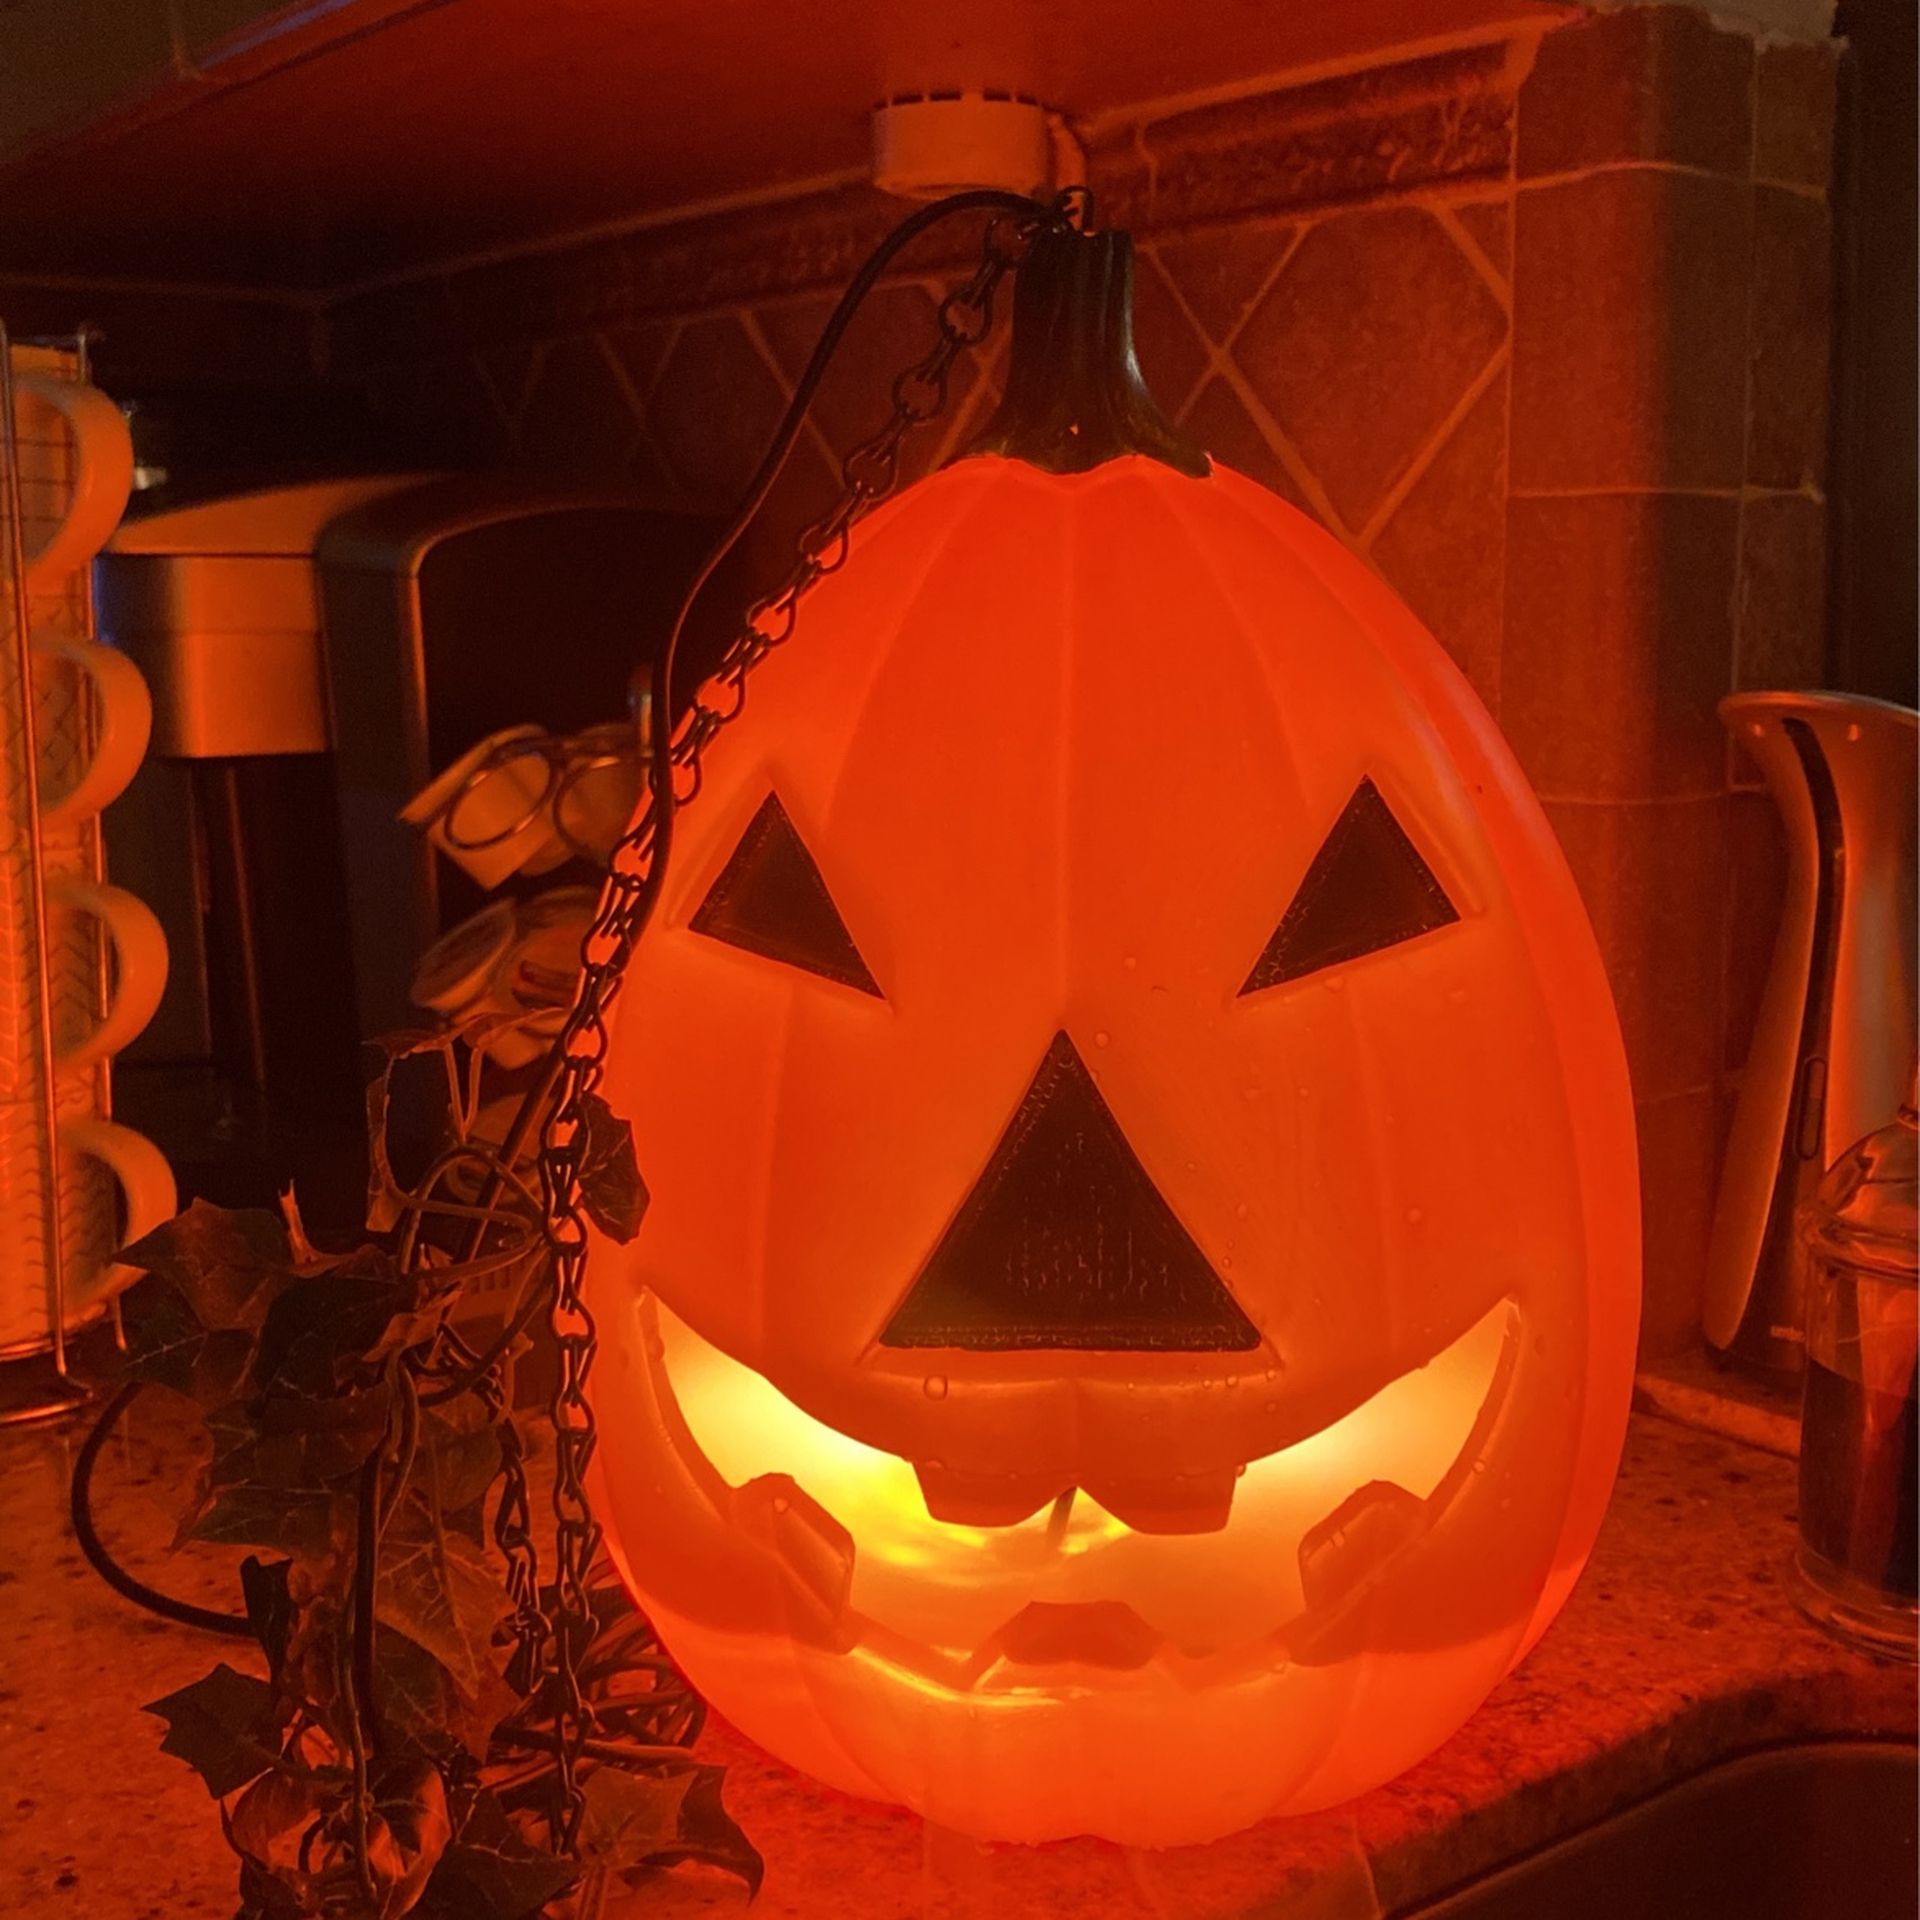 Halloween Lighted Jack-O-Lantern